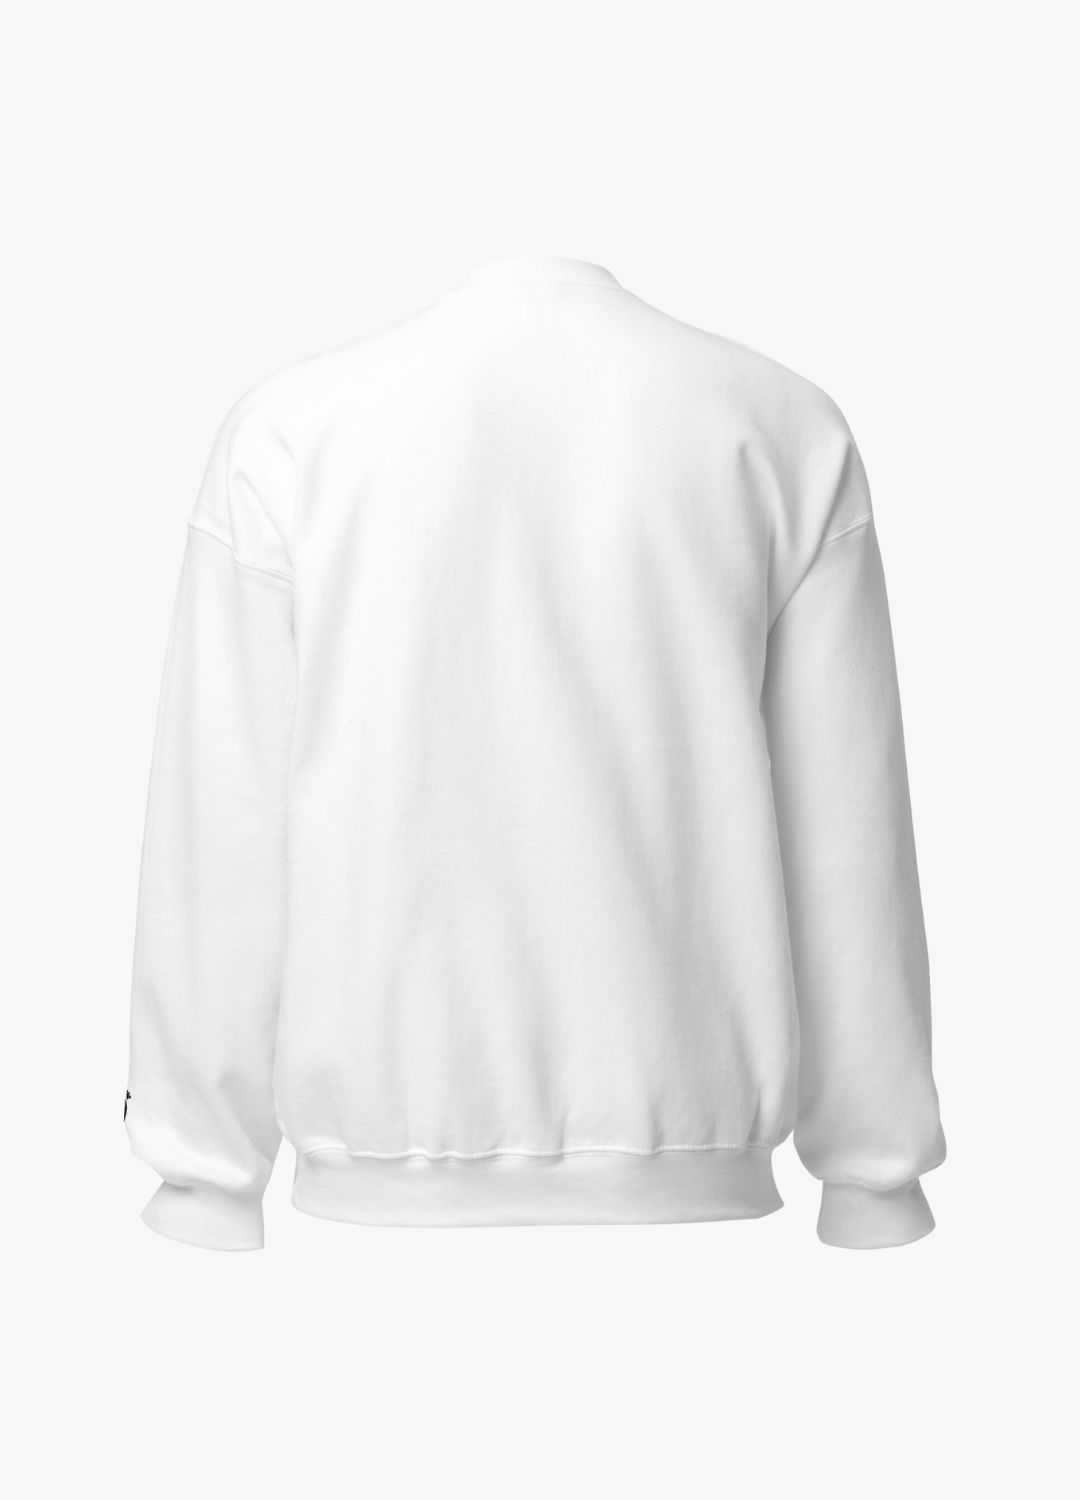 Sweatshirt - Happiness Allergic - All White